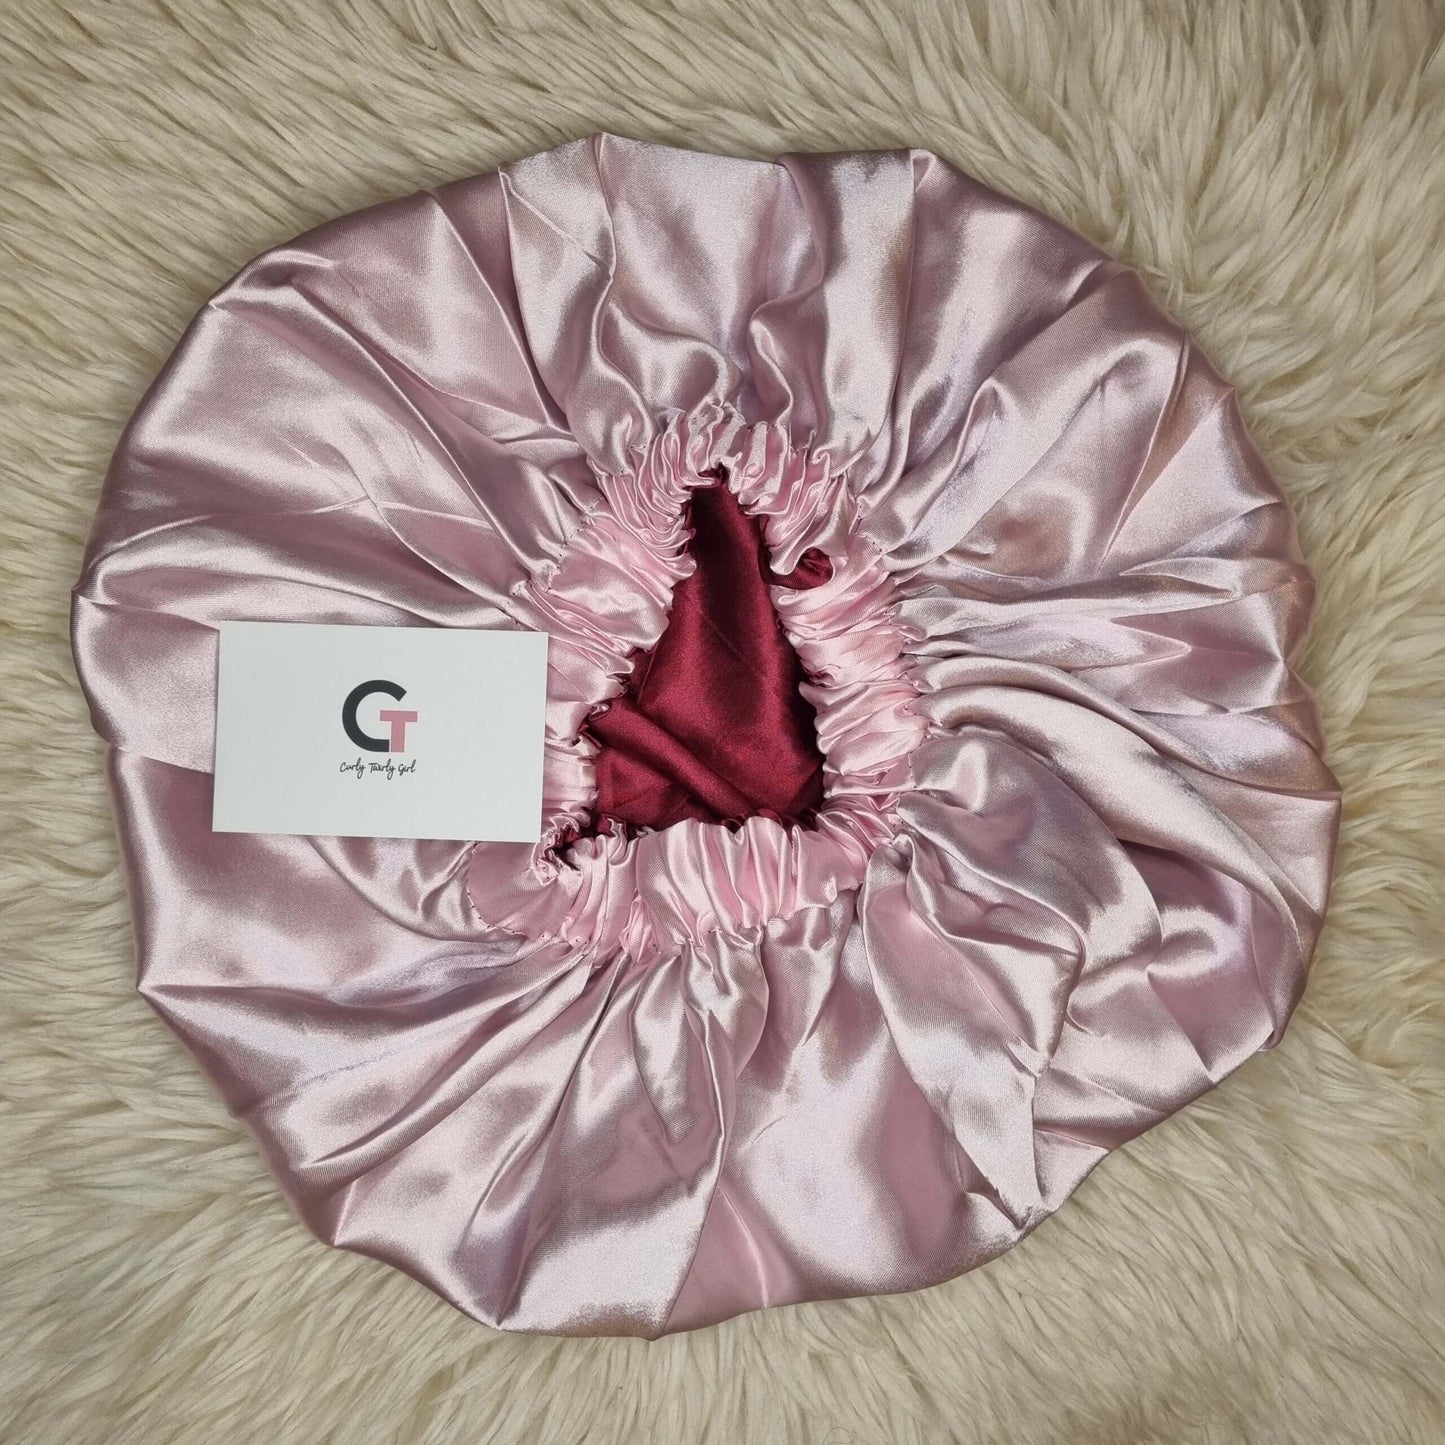 Pink reversible satin bonnet on cream rug